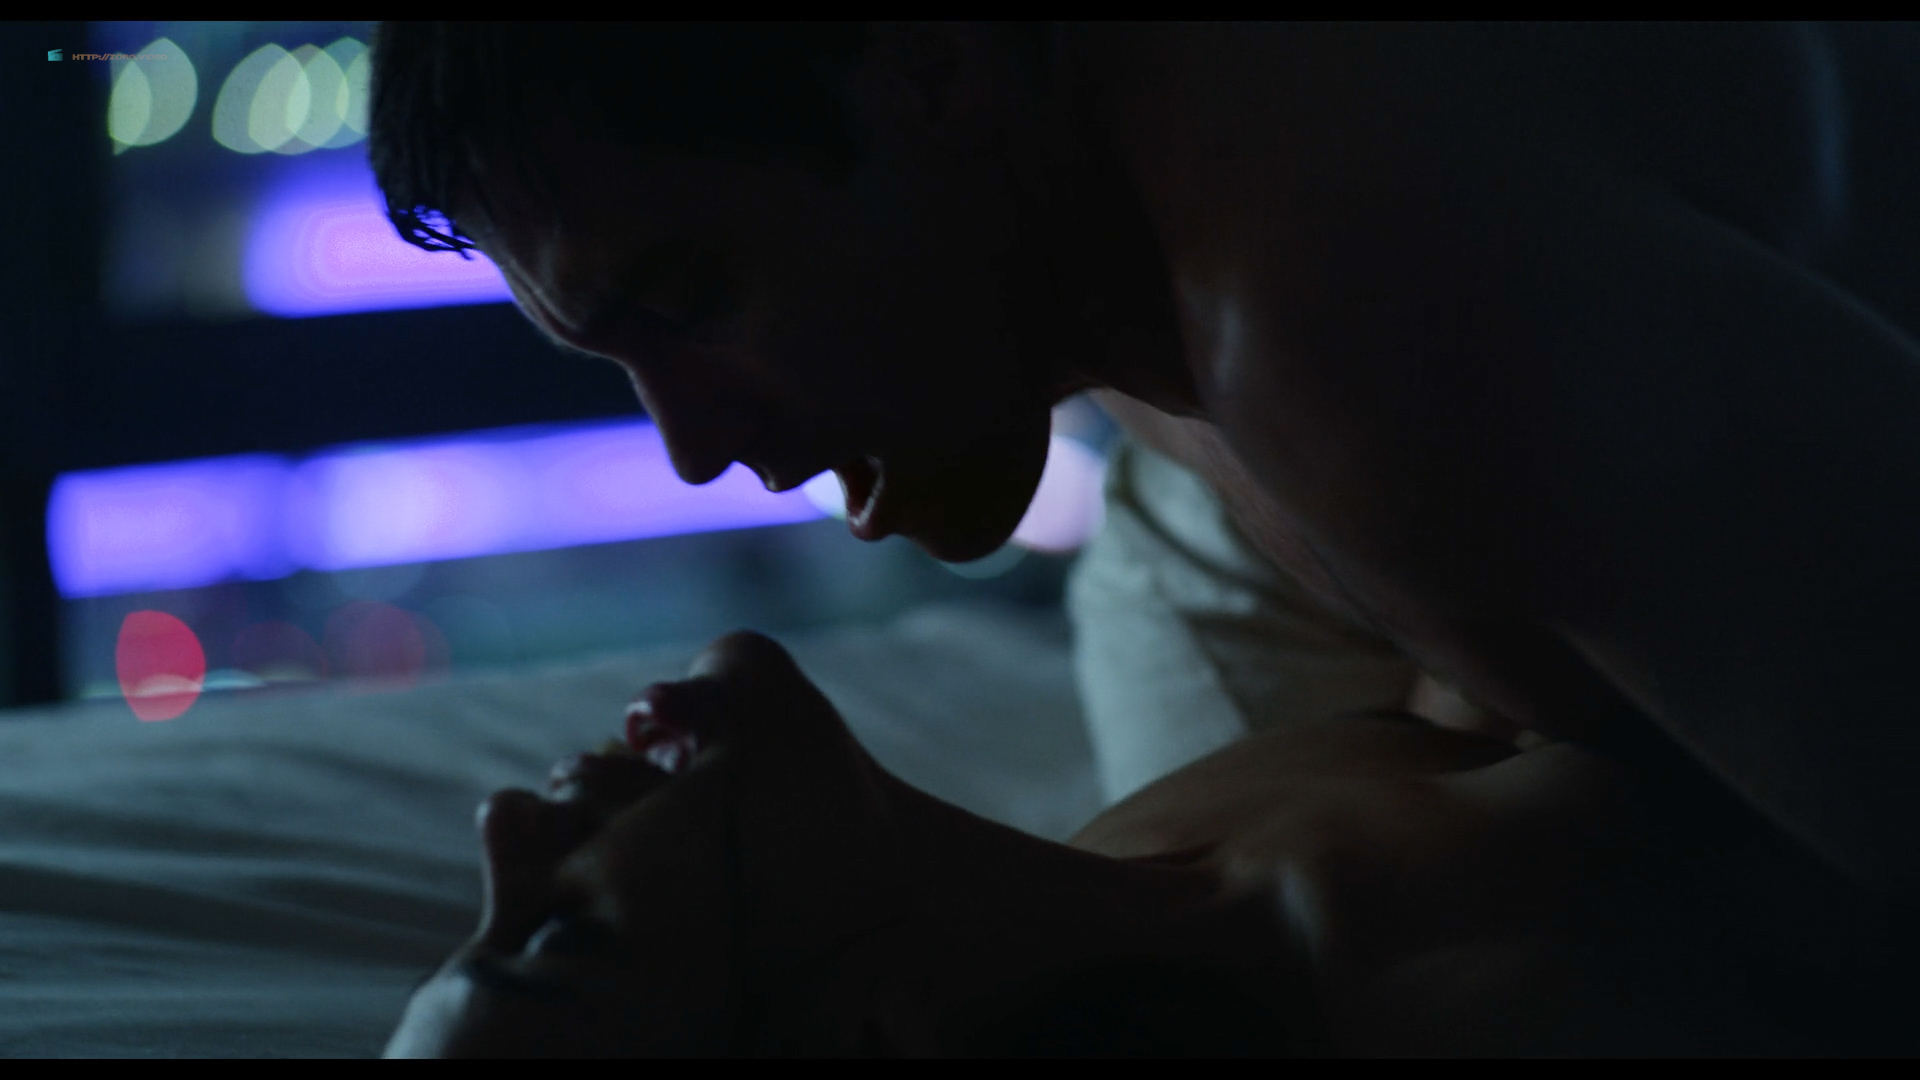 Zawe Ashton hot in one sex scene - Velvet Buzzsaw (2019) HD 1080p (6)